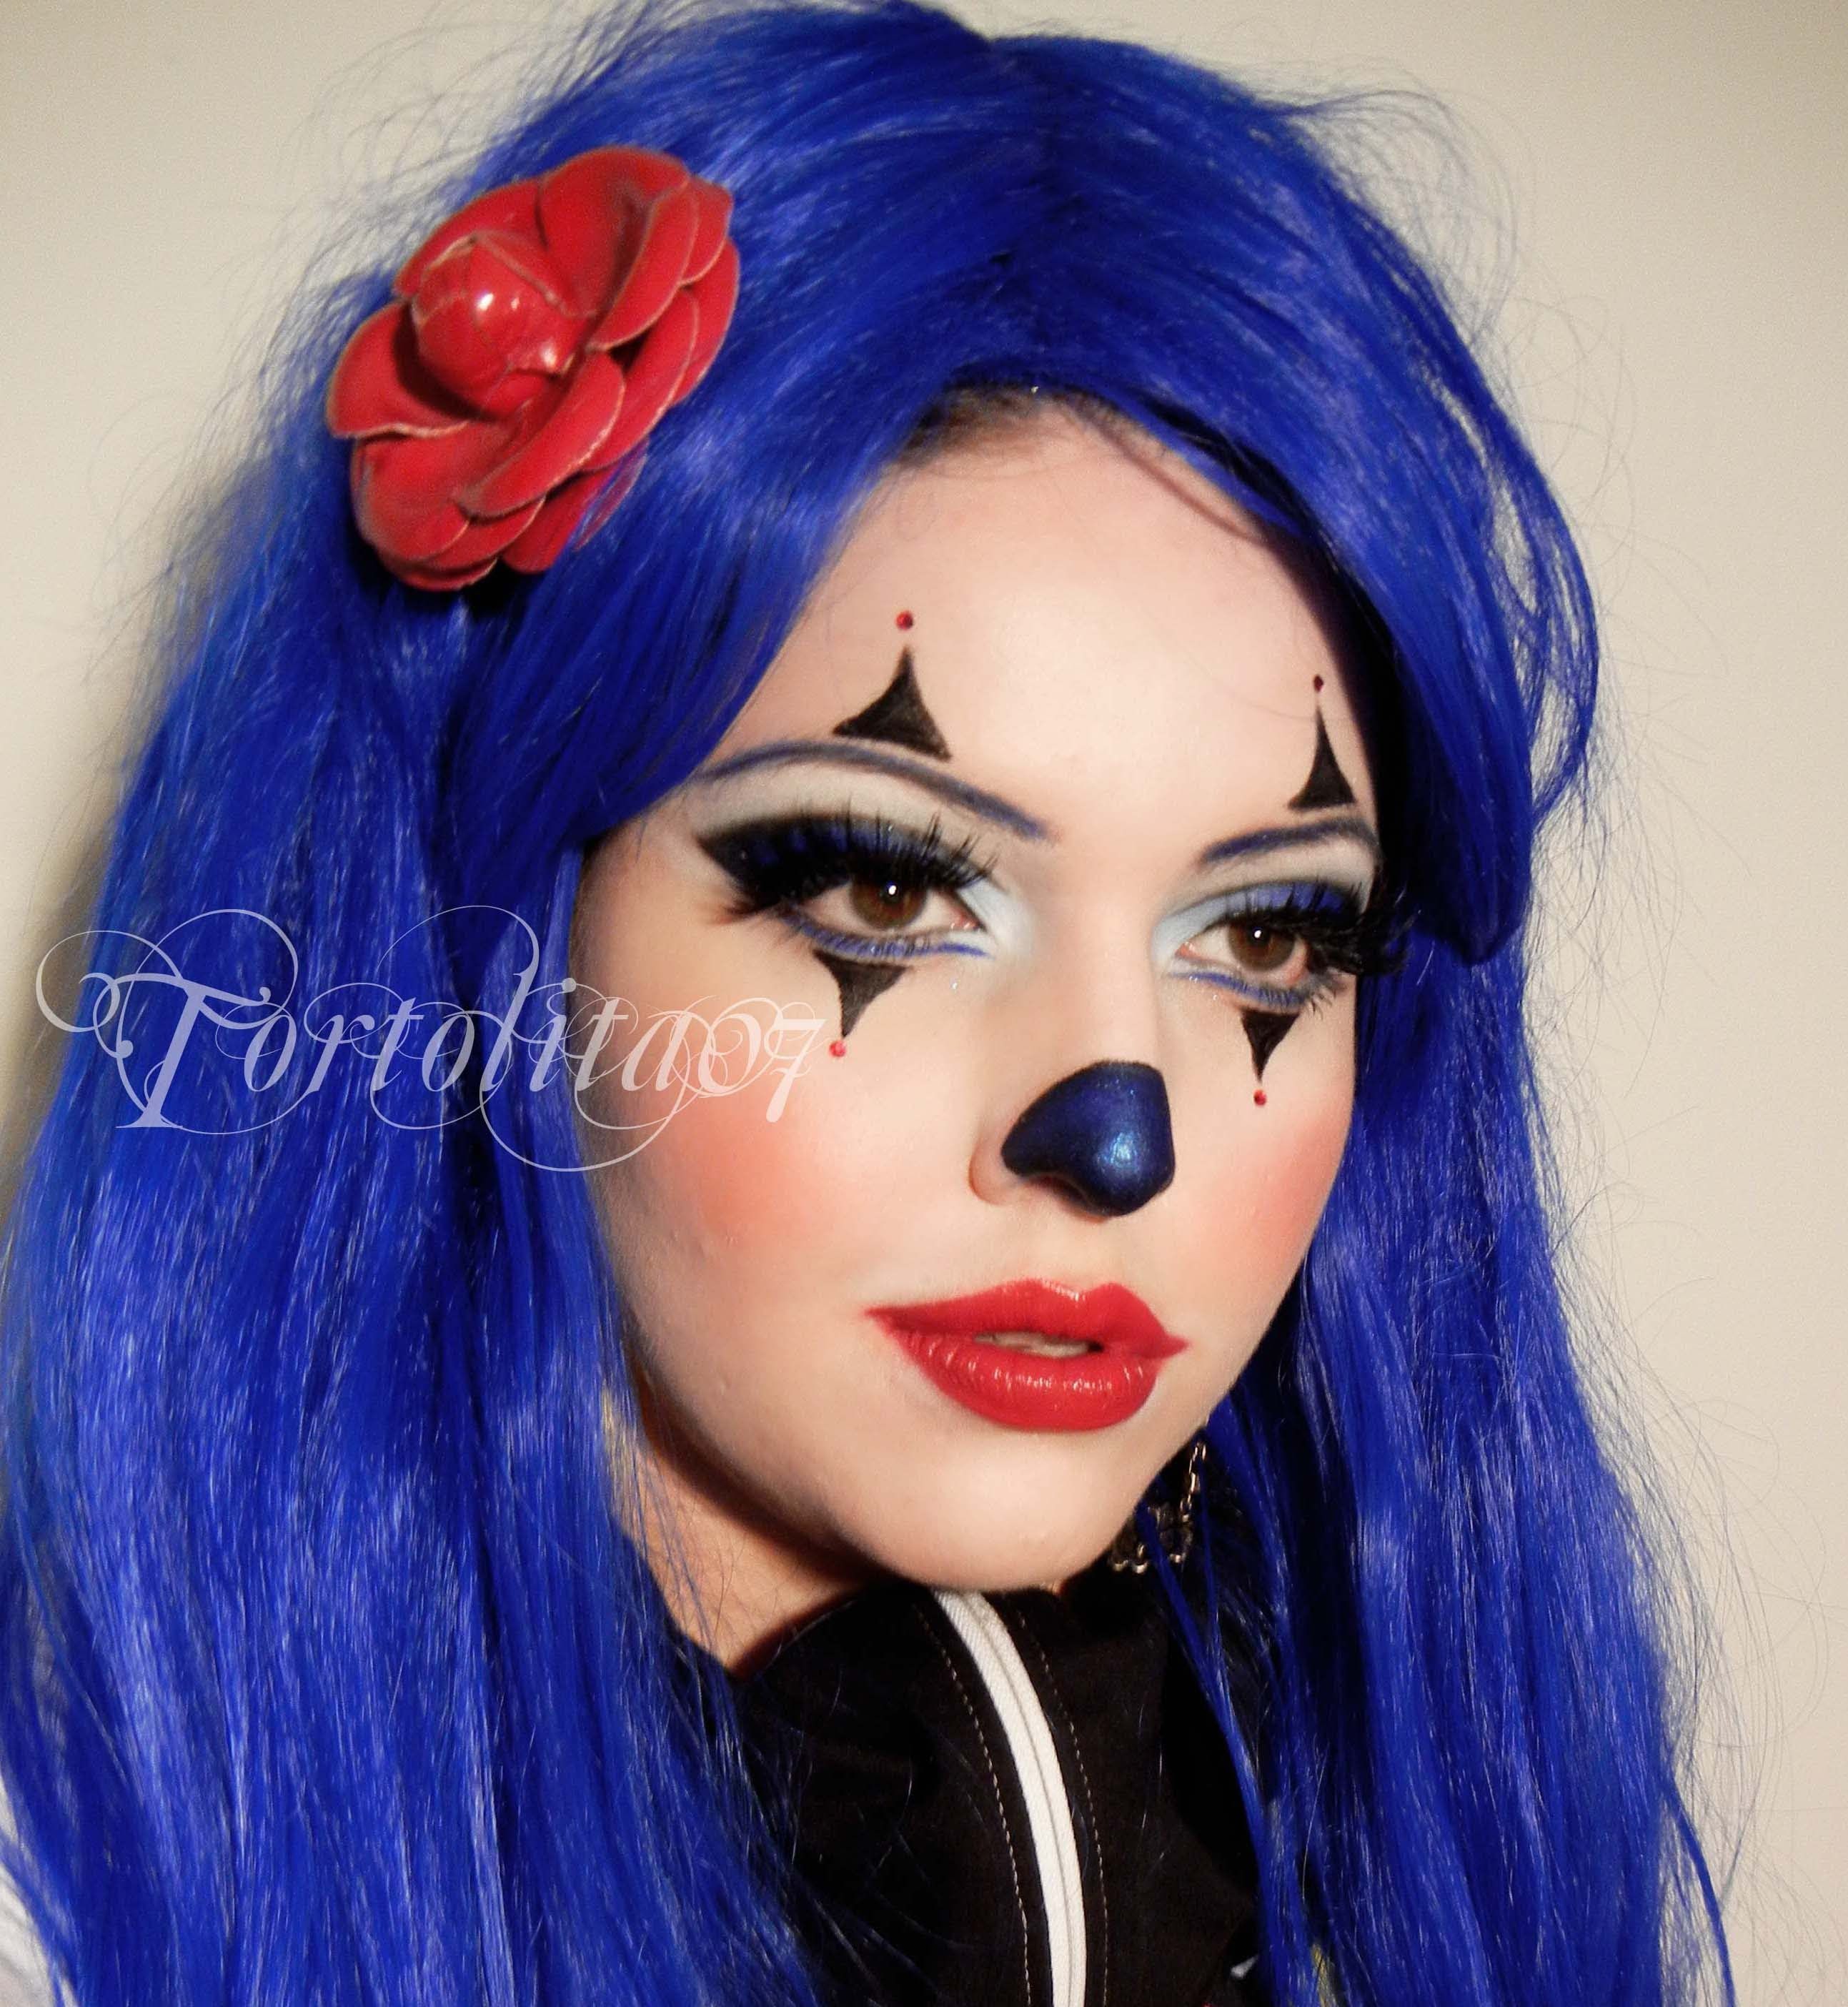 Cute Girly Clown Makeup Tutorial, via YouTube.